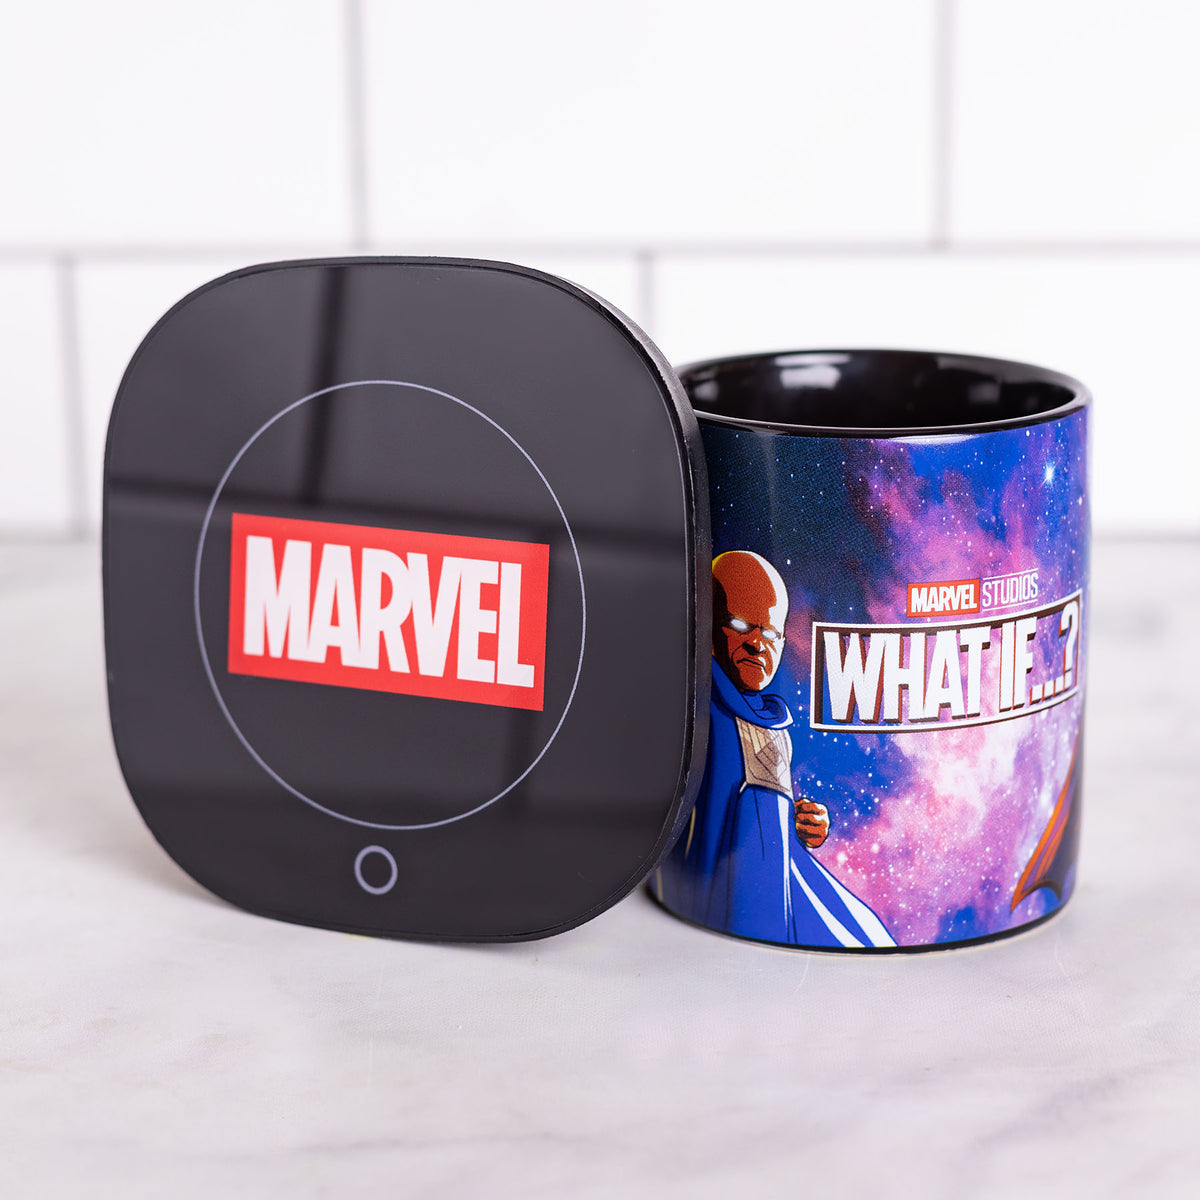 Marvel What If? Mug Warmer Set